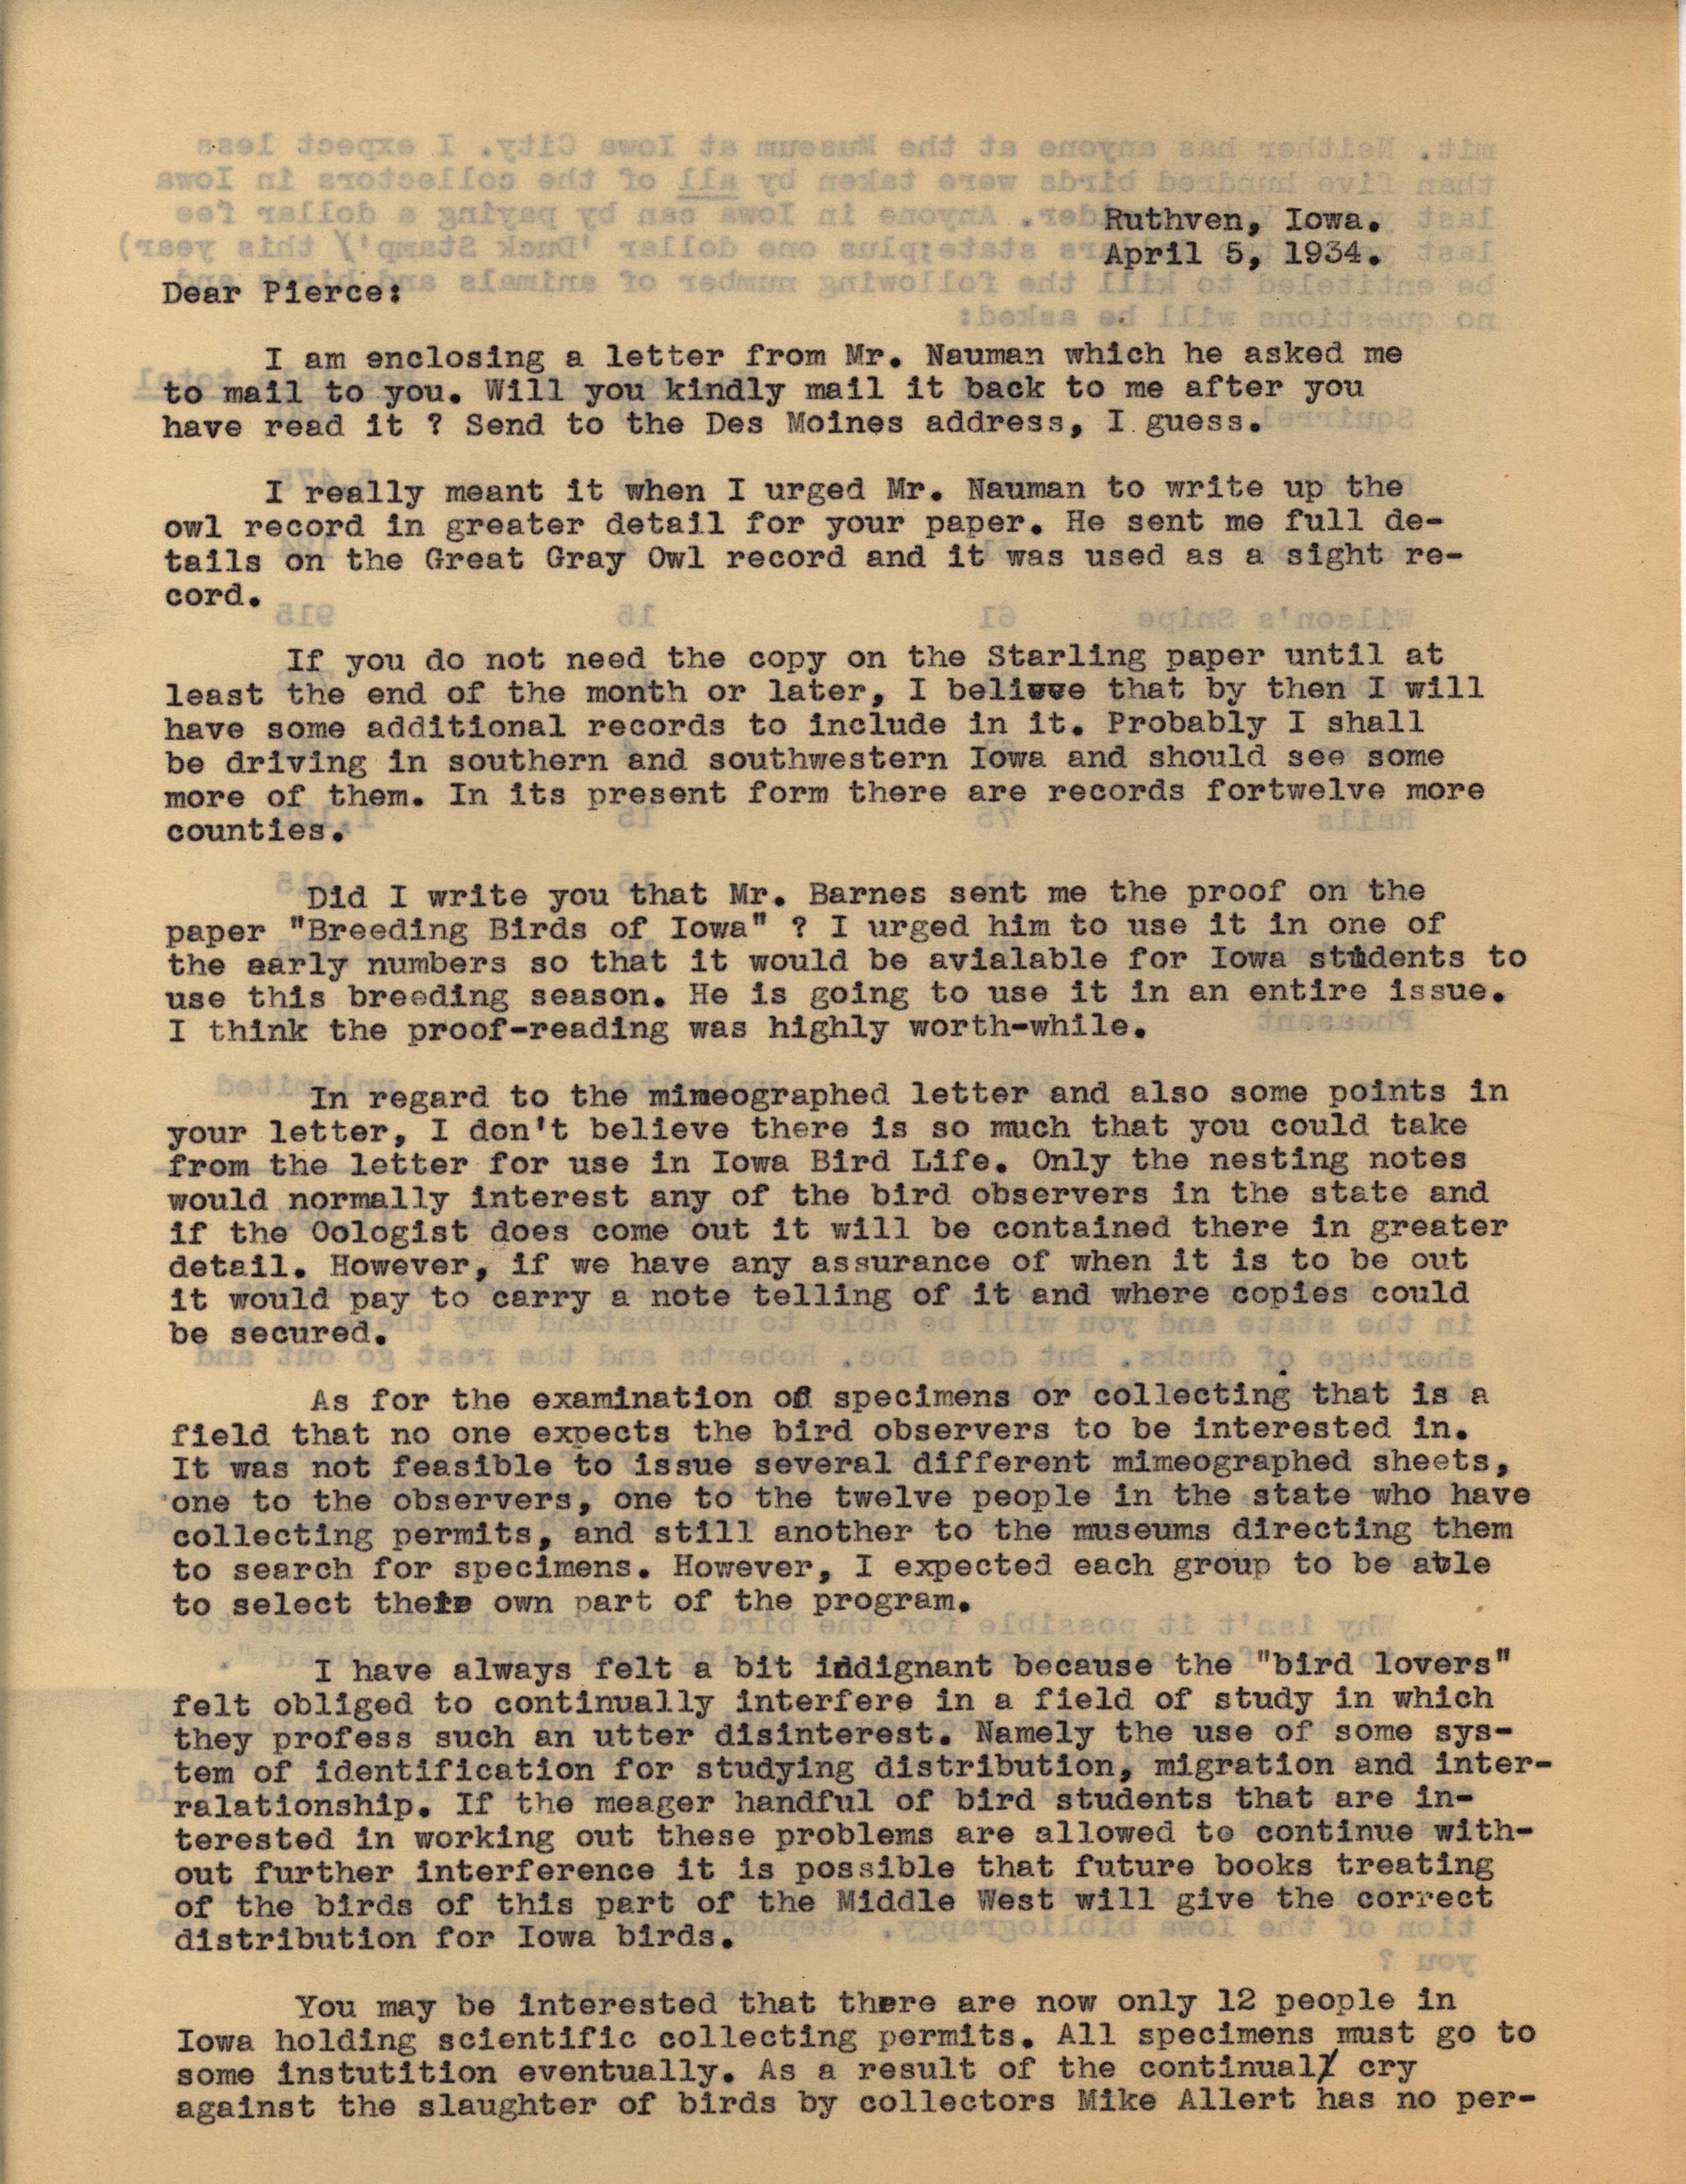 Philip DuMont letter to Fred Pierce regarding specimen collecting, April 5, 1934